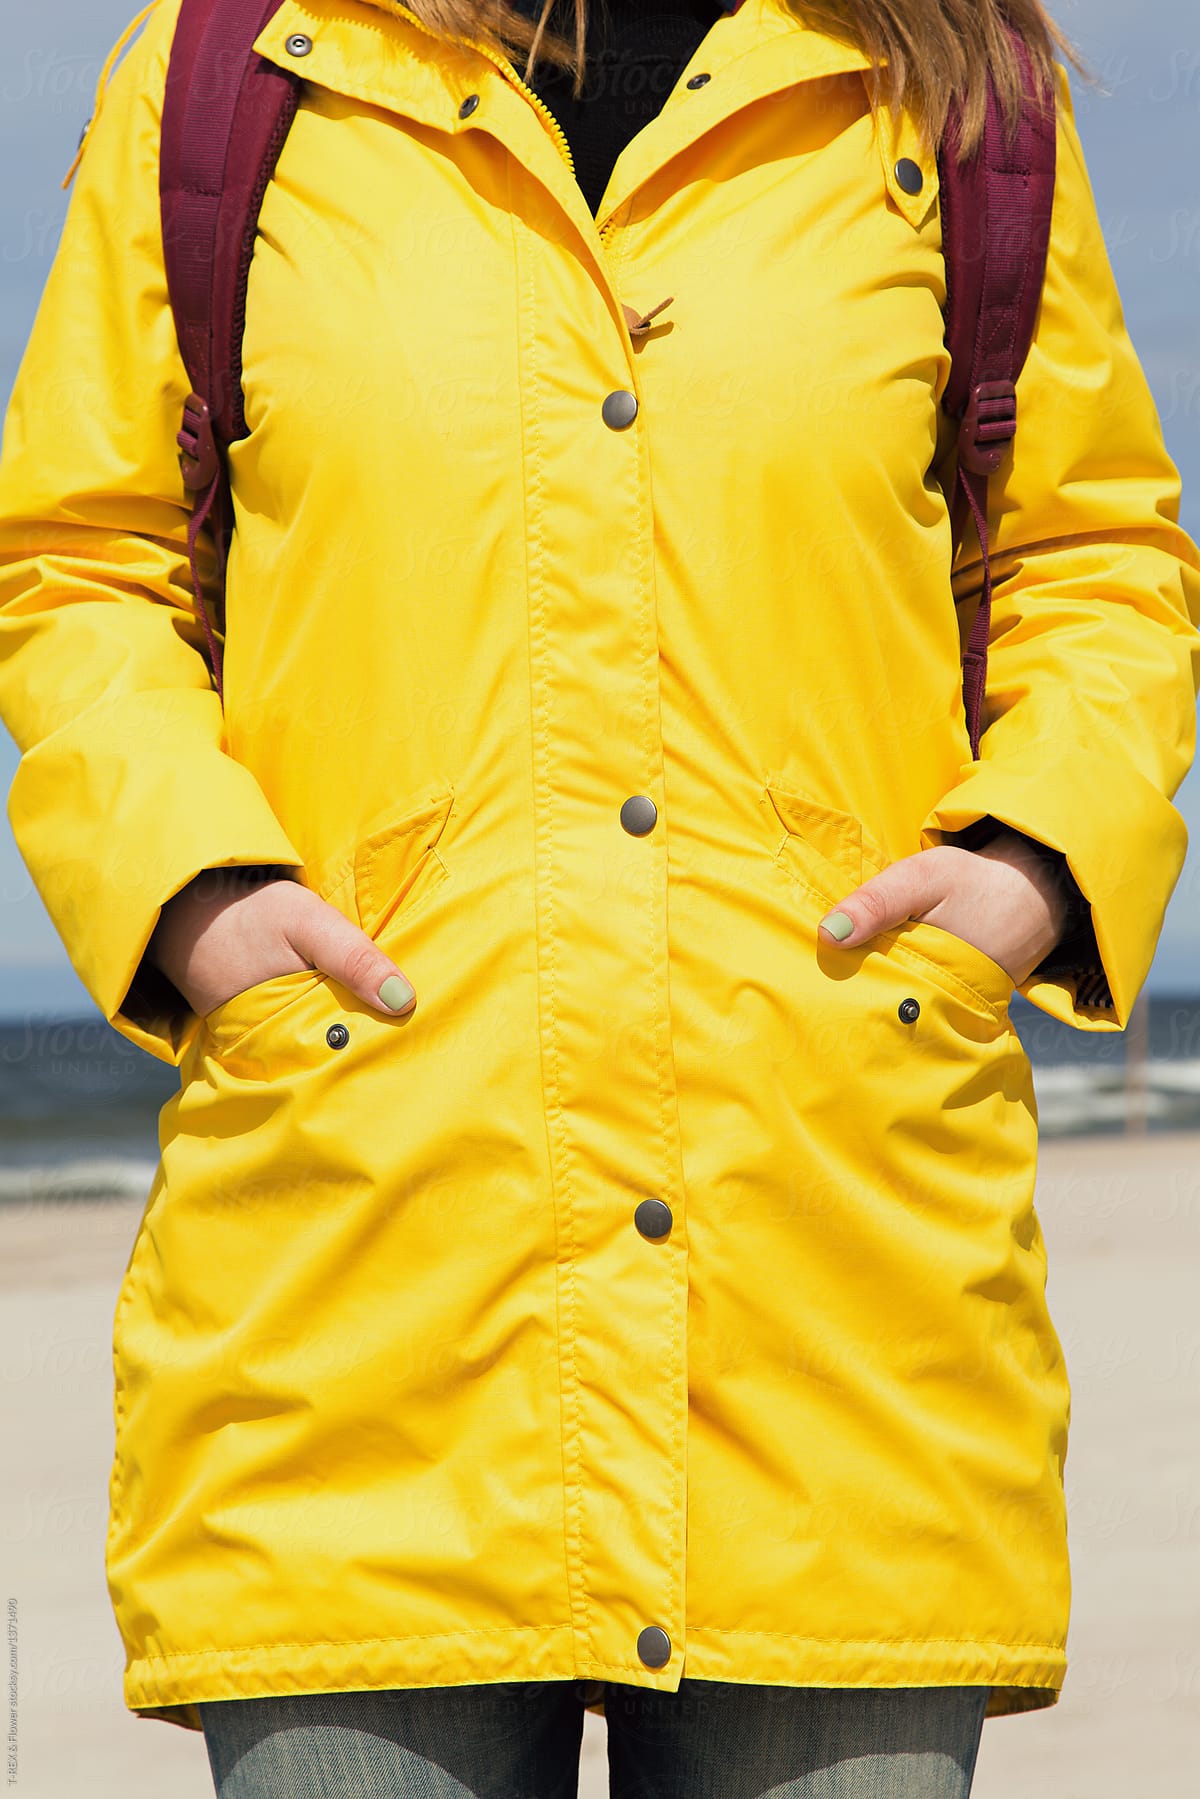 Faceless shot of woman in raincoat